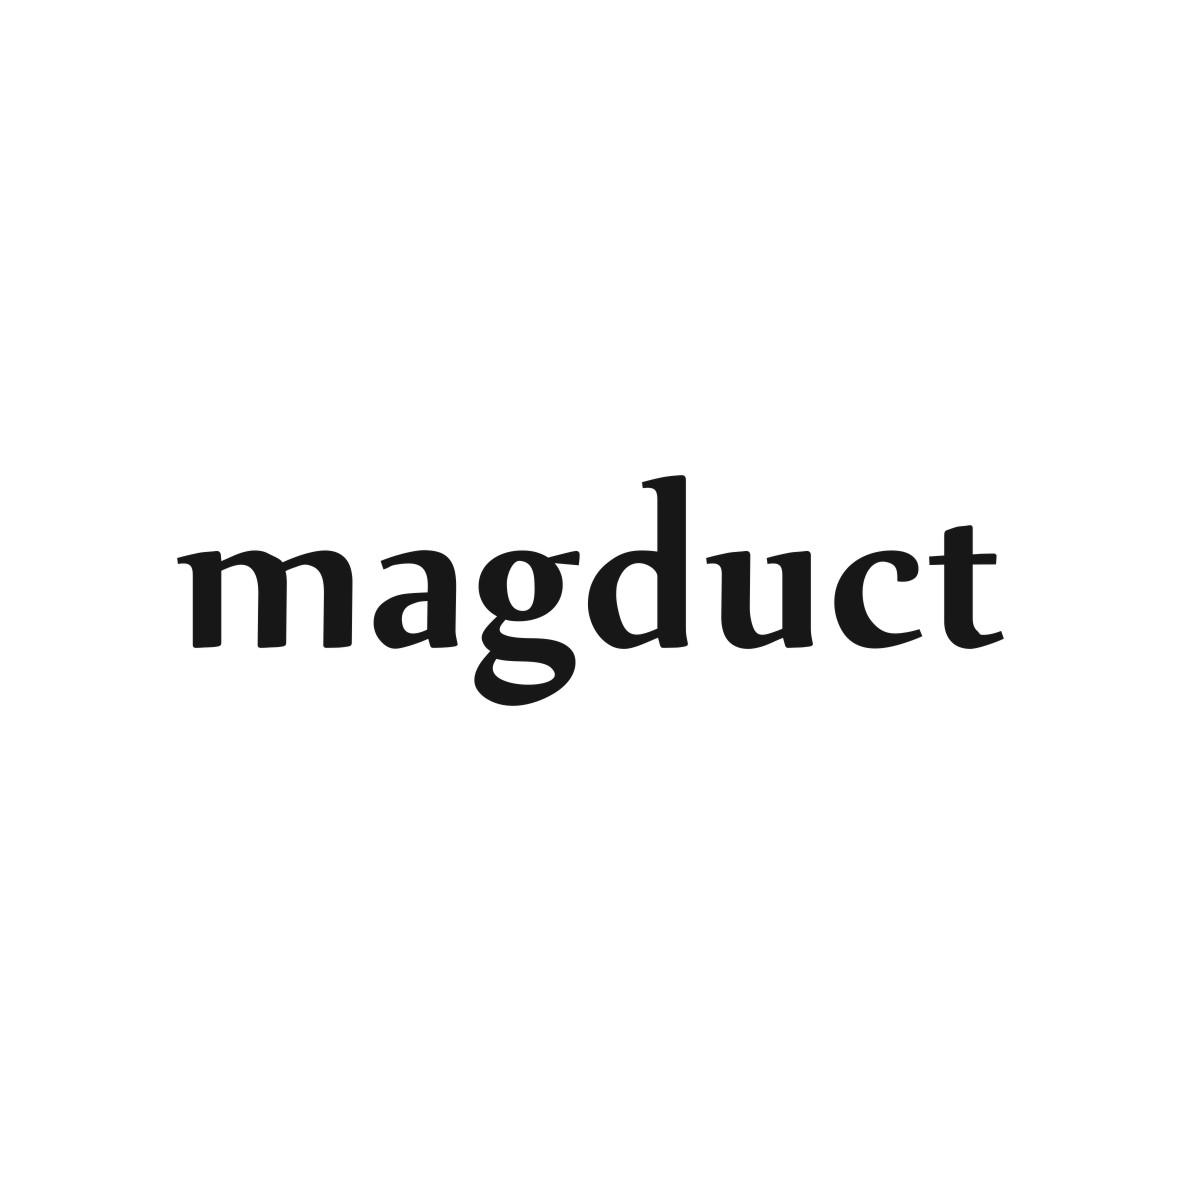 MAGDUCT商标转让